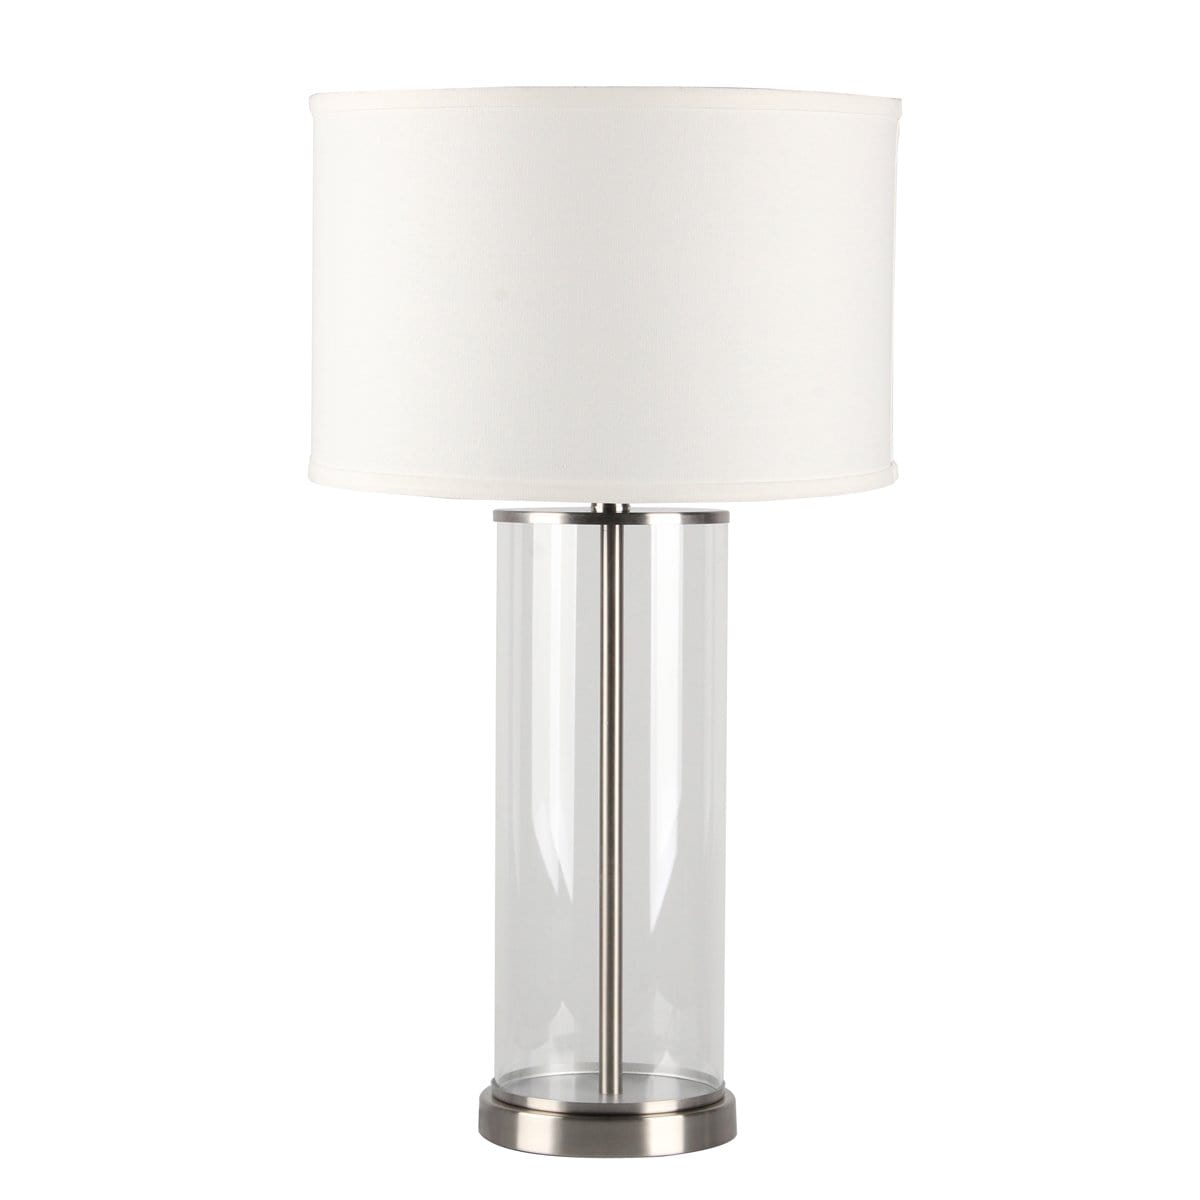 CAFE LIGHTING & LIVING Table Lamp Left Bank Table Lamp - Nickel w White Shade B12264